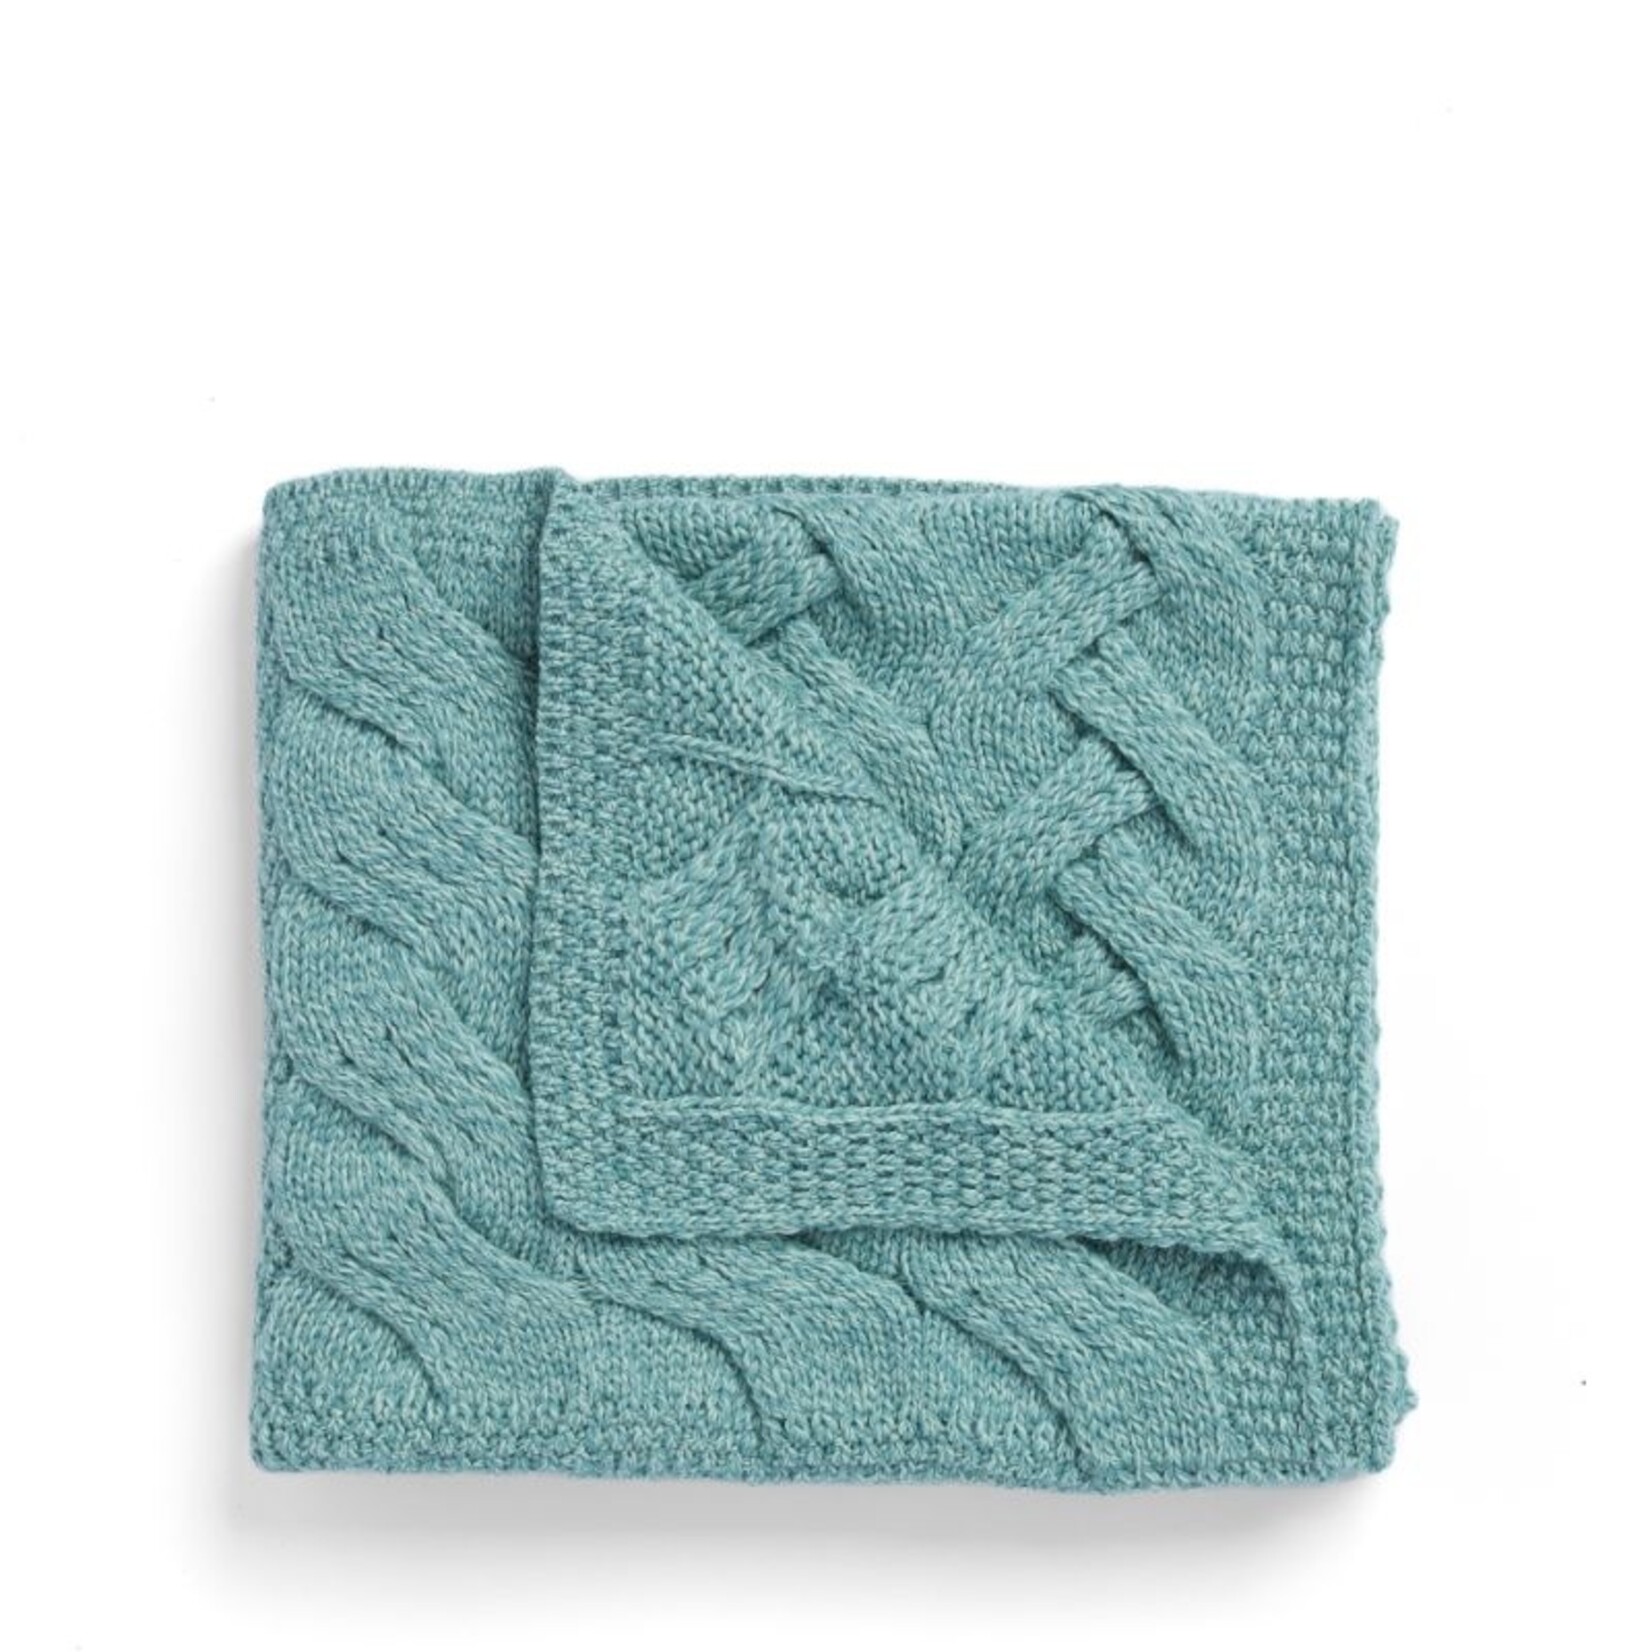 Aran Woollen Mills Supersoft Merino Aran Baby Blanket: Sea Foam Green